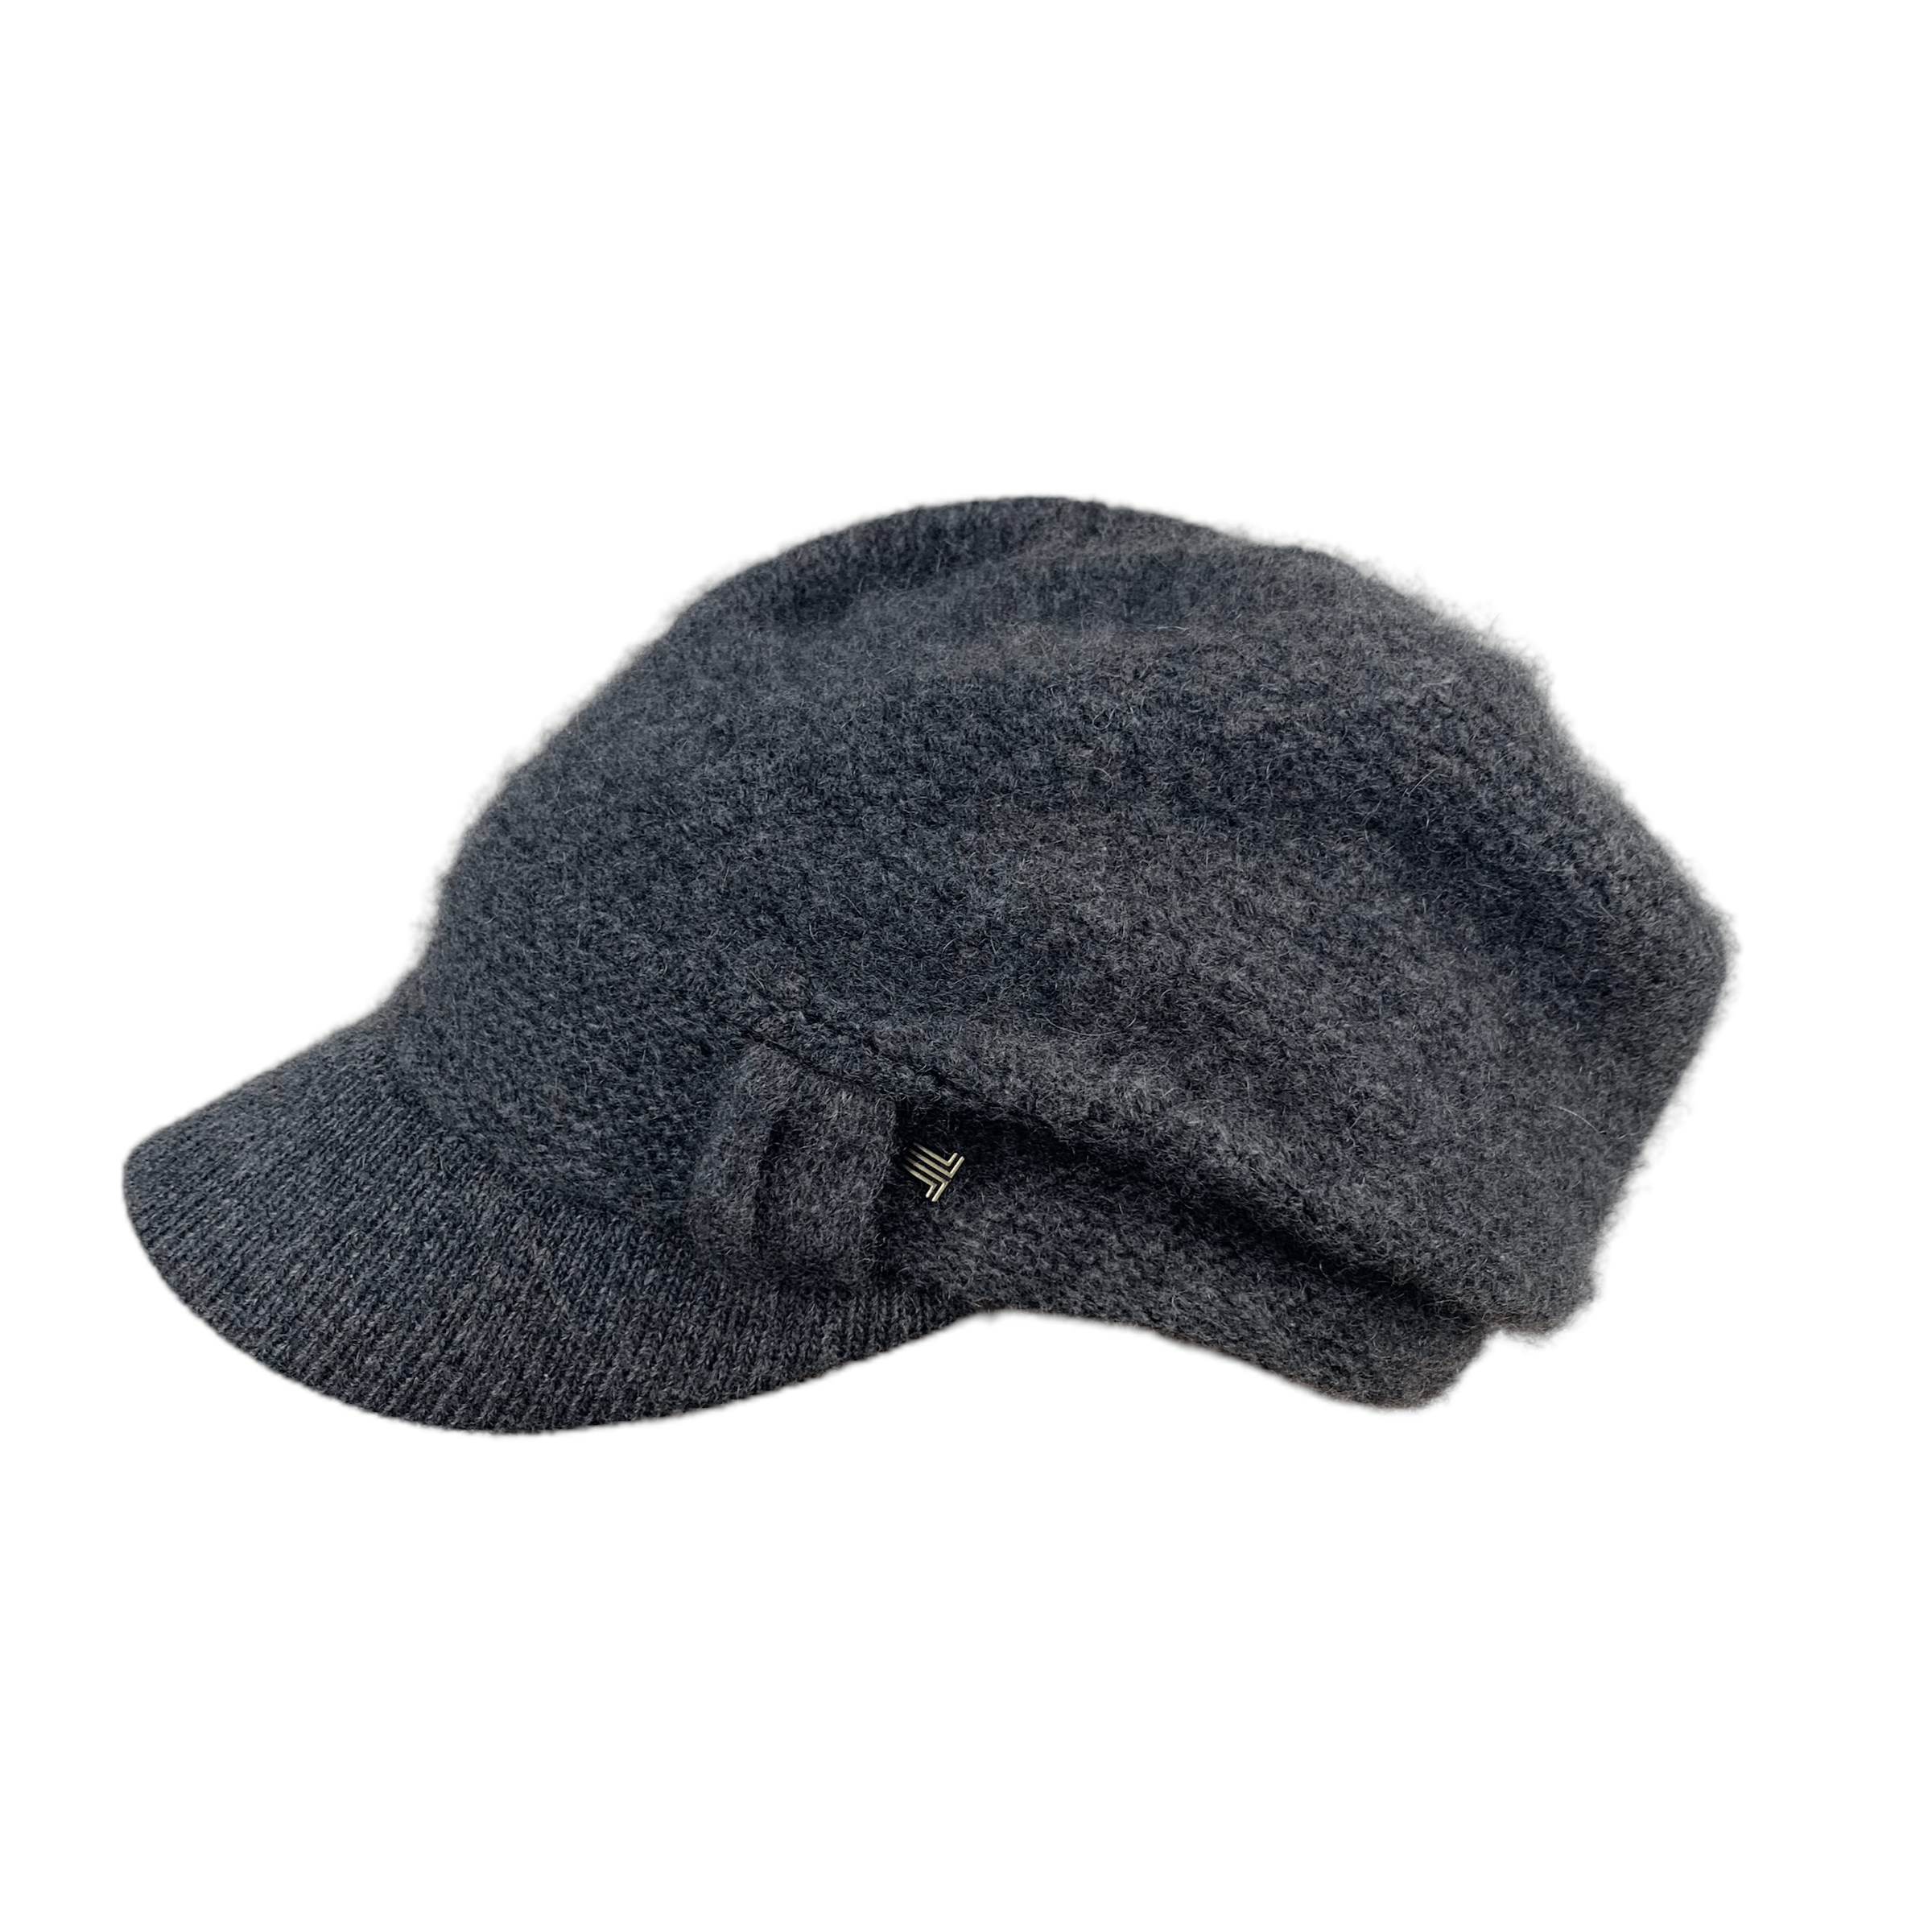 Lanvin Hats #140-F - 1